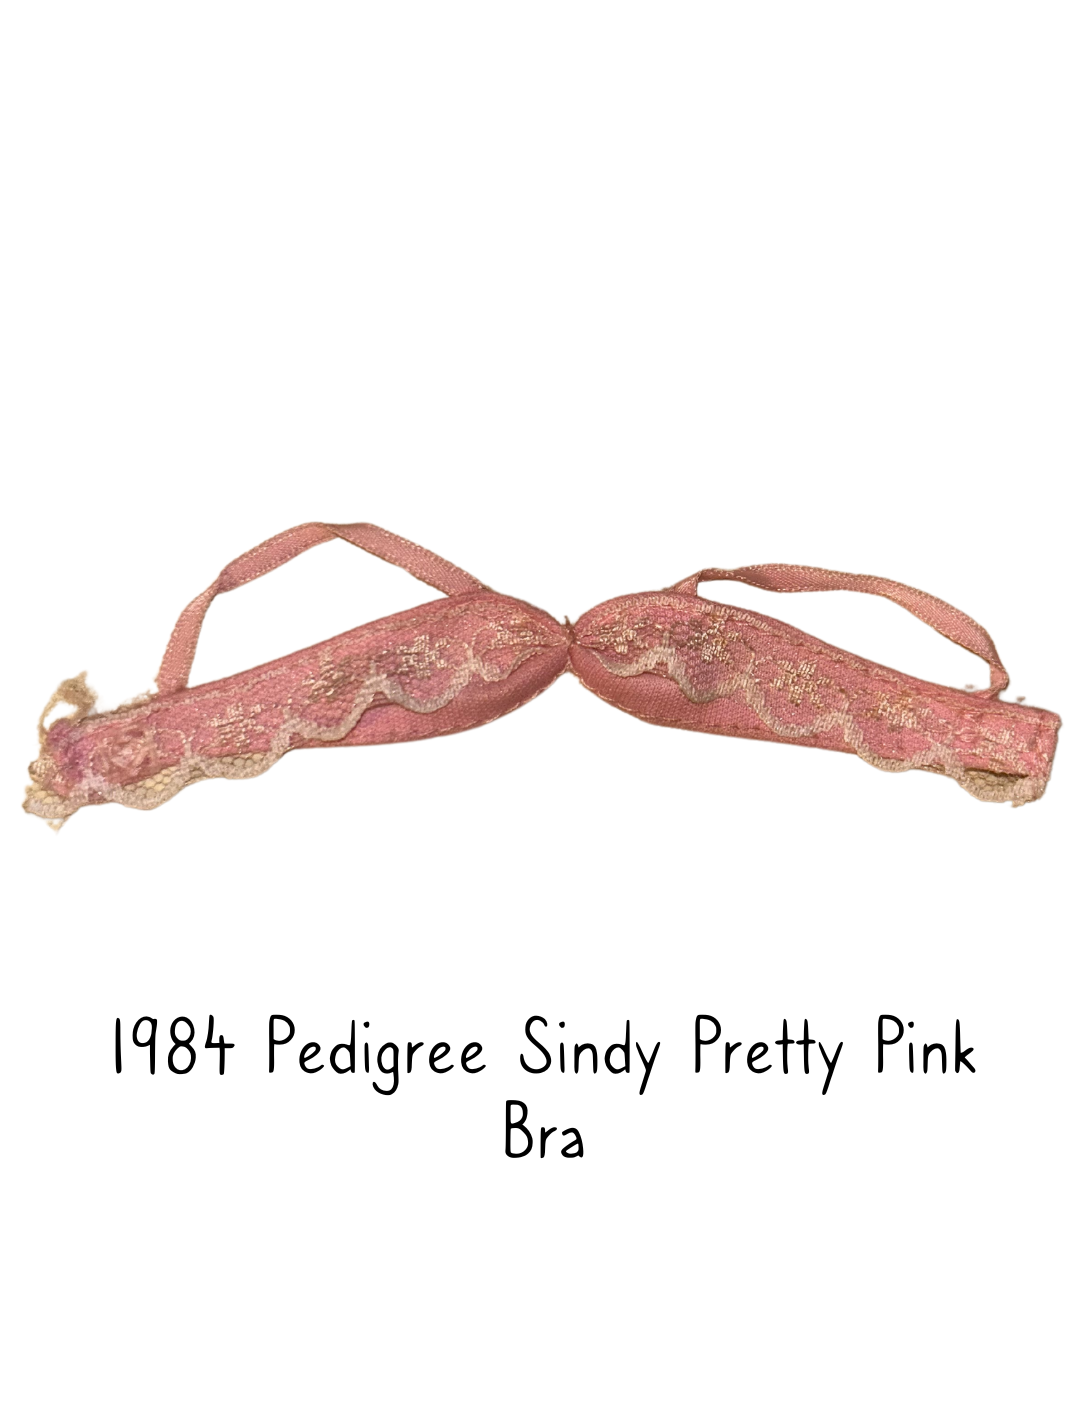 1984 Pedigree Sindy Pretty Pink Lingerie Bra